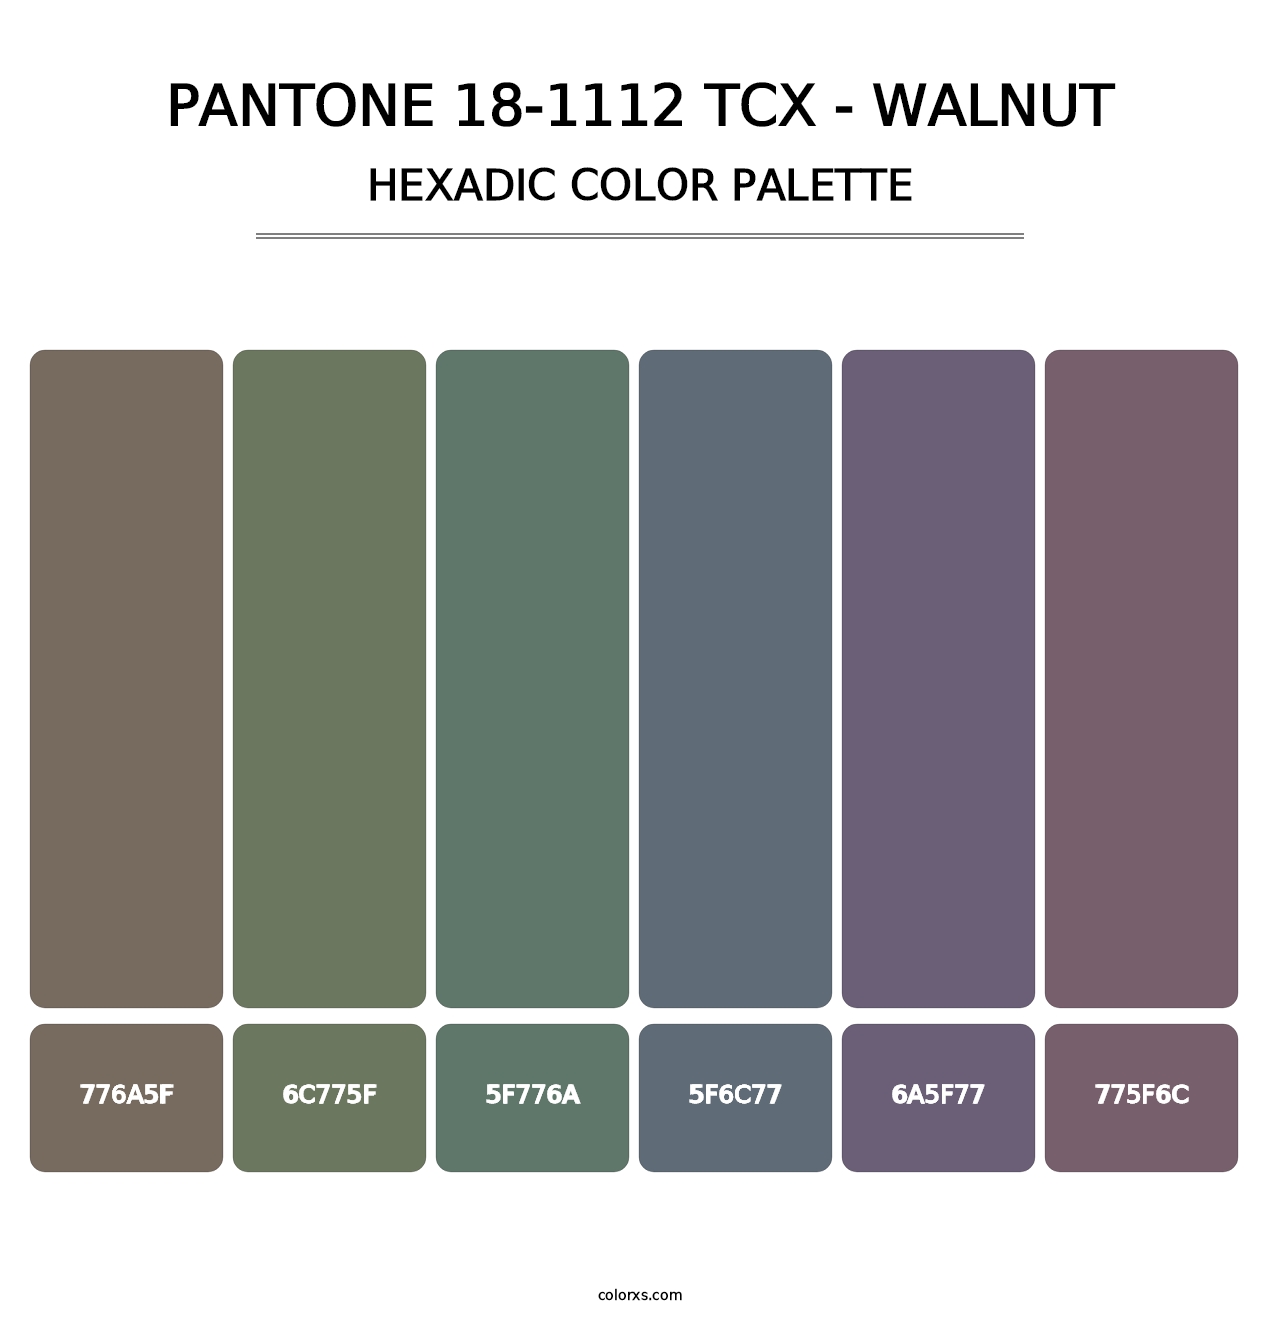 PANTONE 18-1112 TCX - Walnut - Hexadic Color Palette